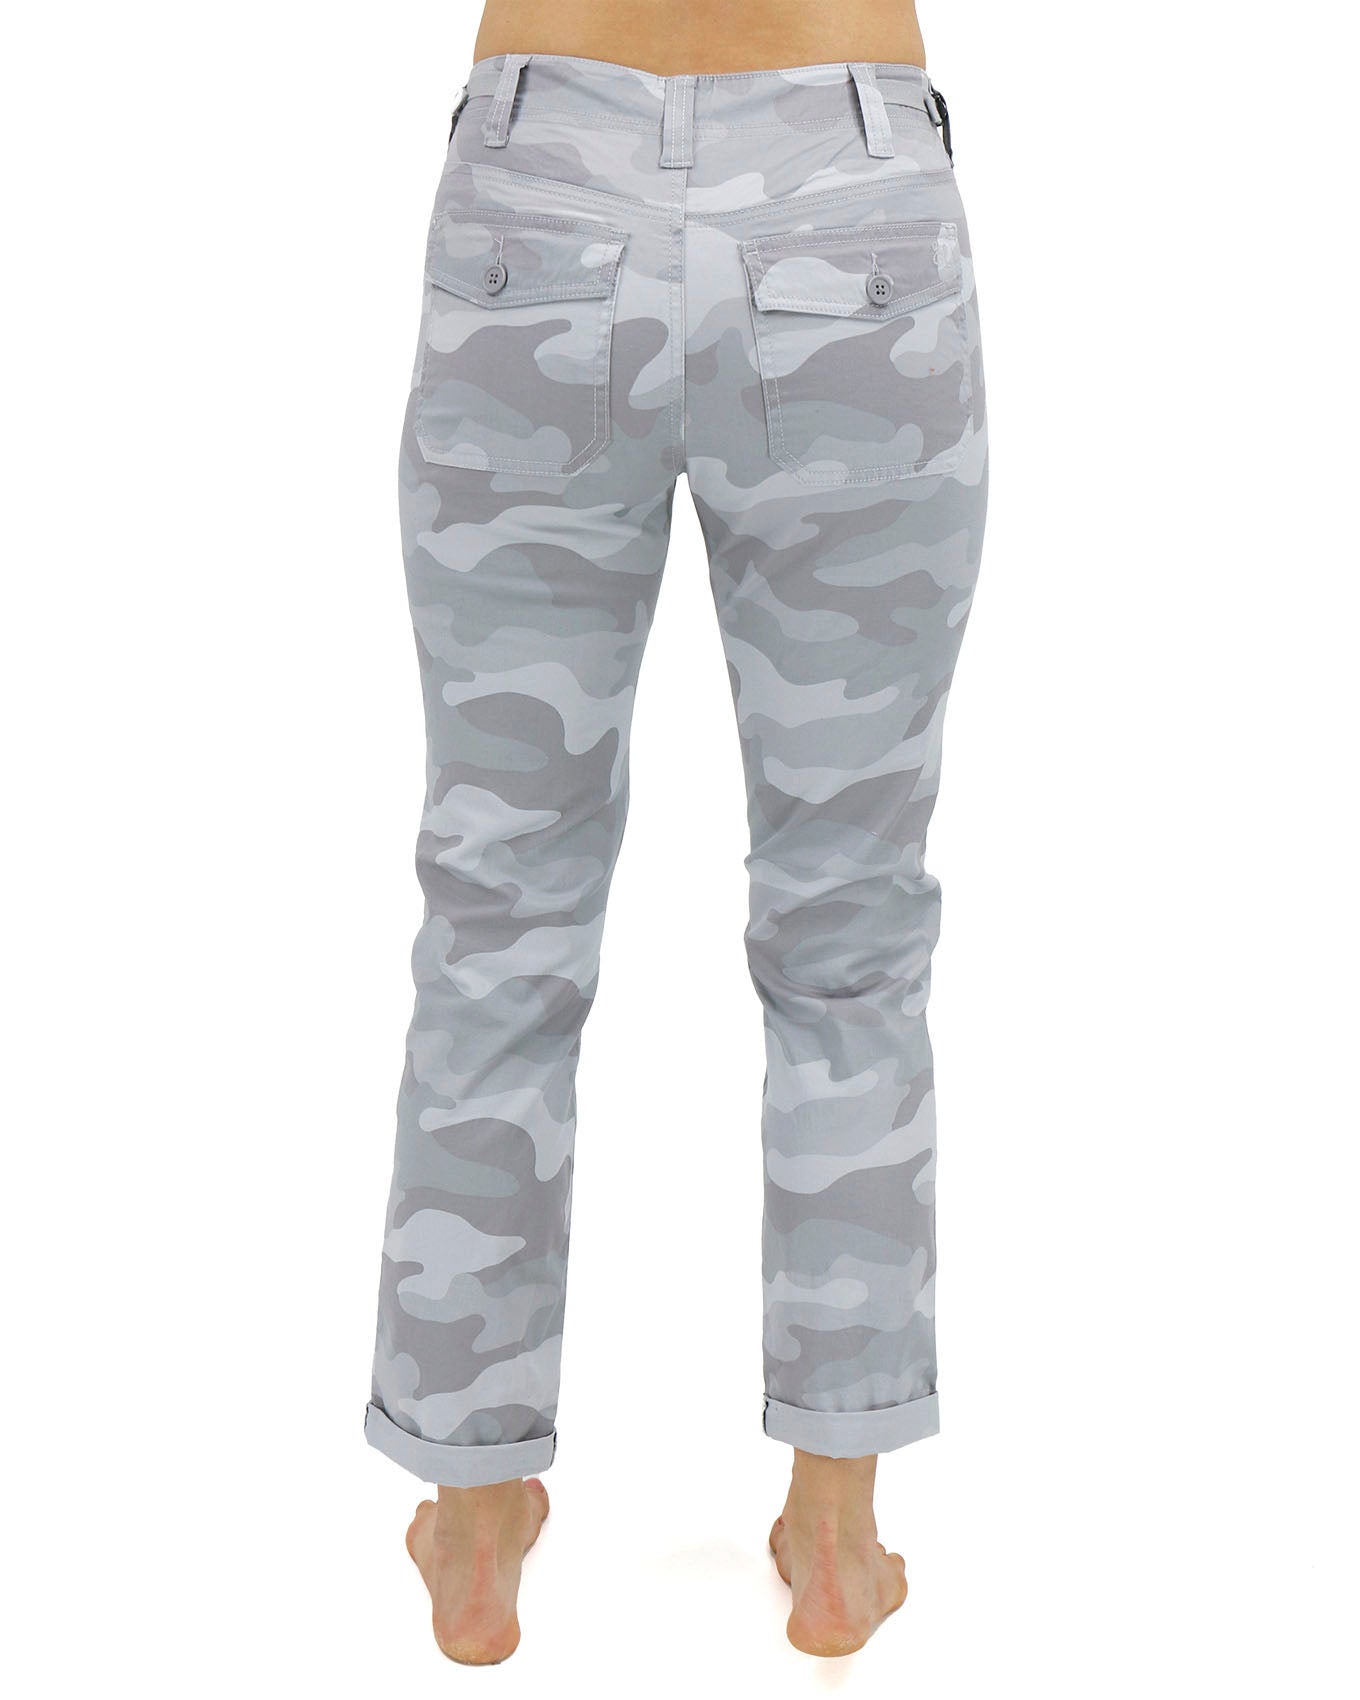 Camo Cargo Chic Camo Grey Camouflage Printed Stretch Cargo Trouser